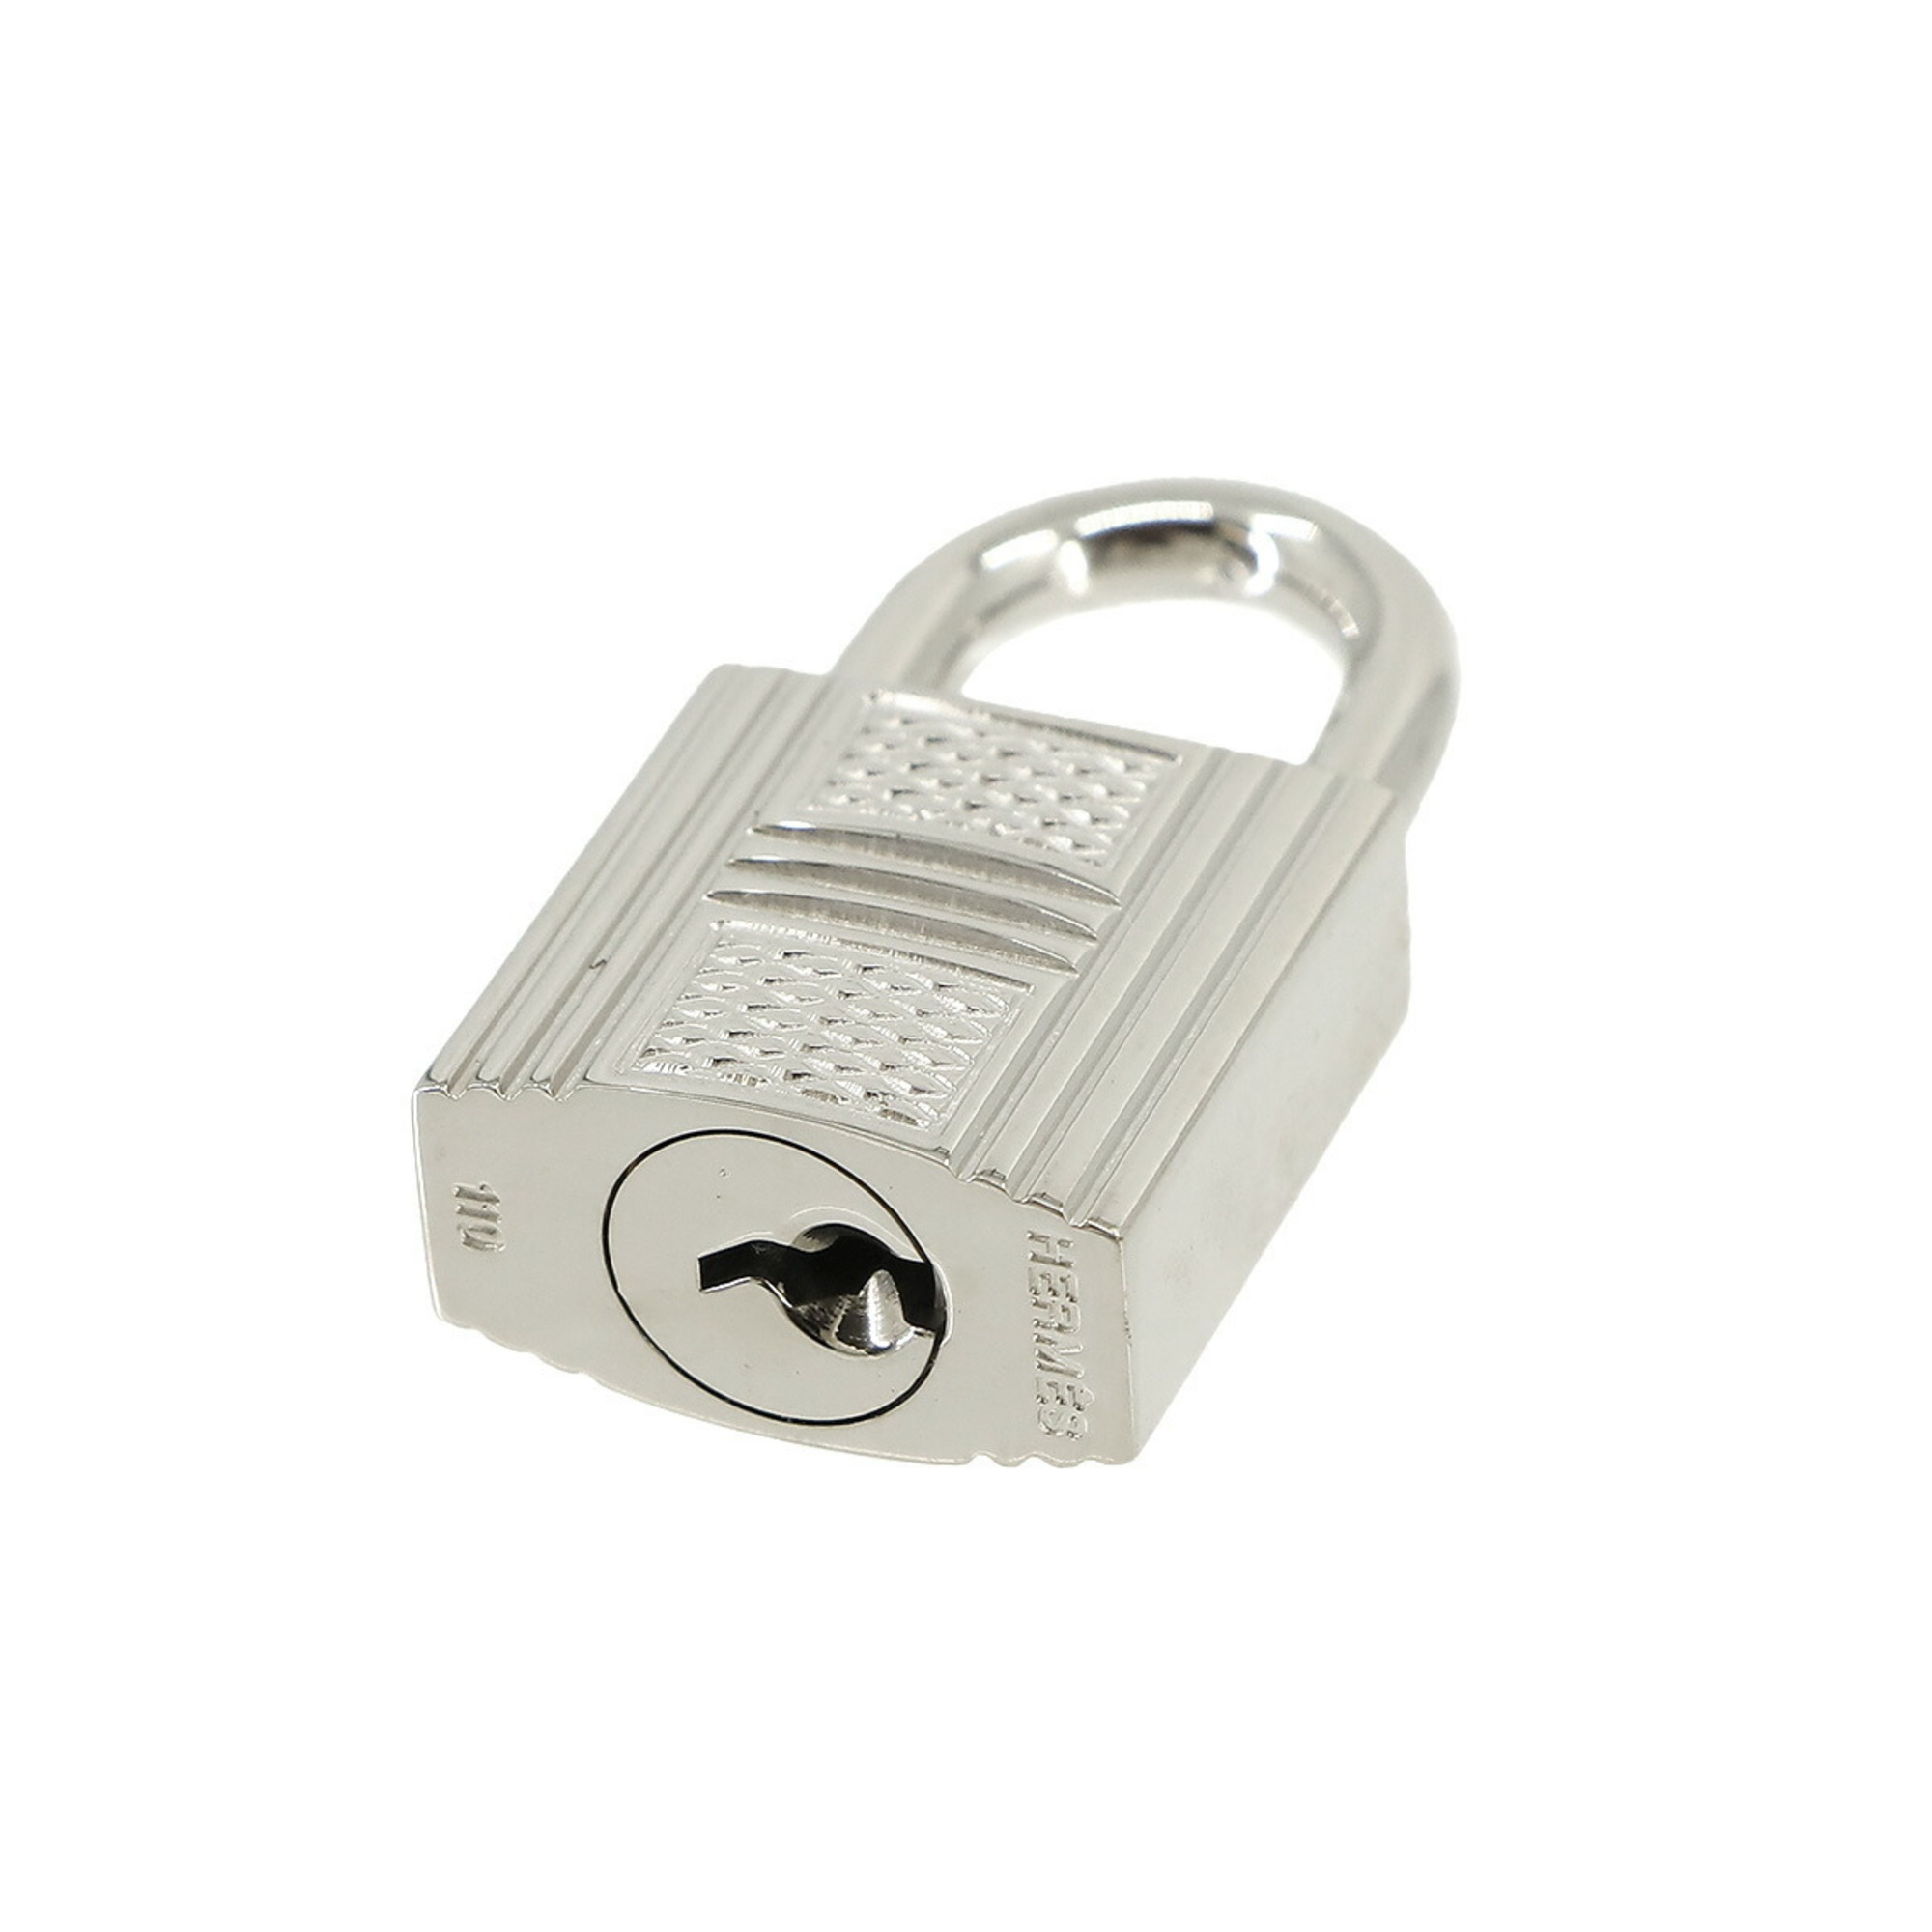 Hermes Guilloche Cadena Key Set Padlock Silver Lock